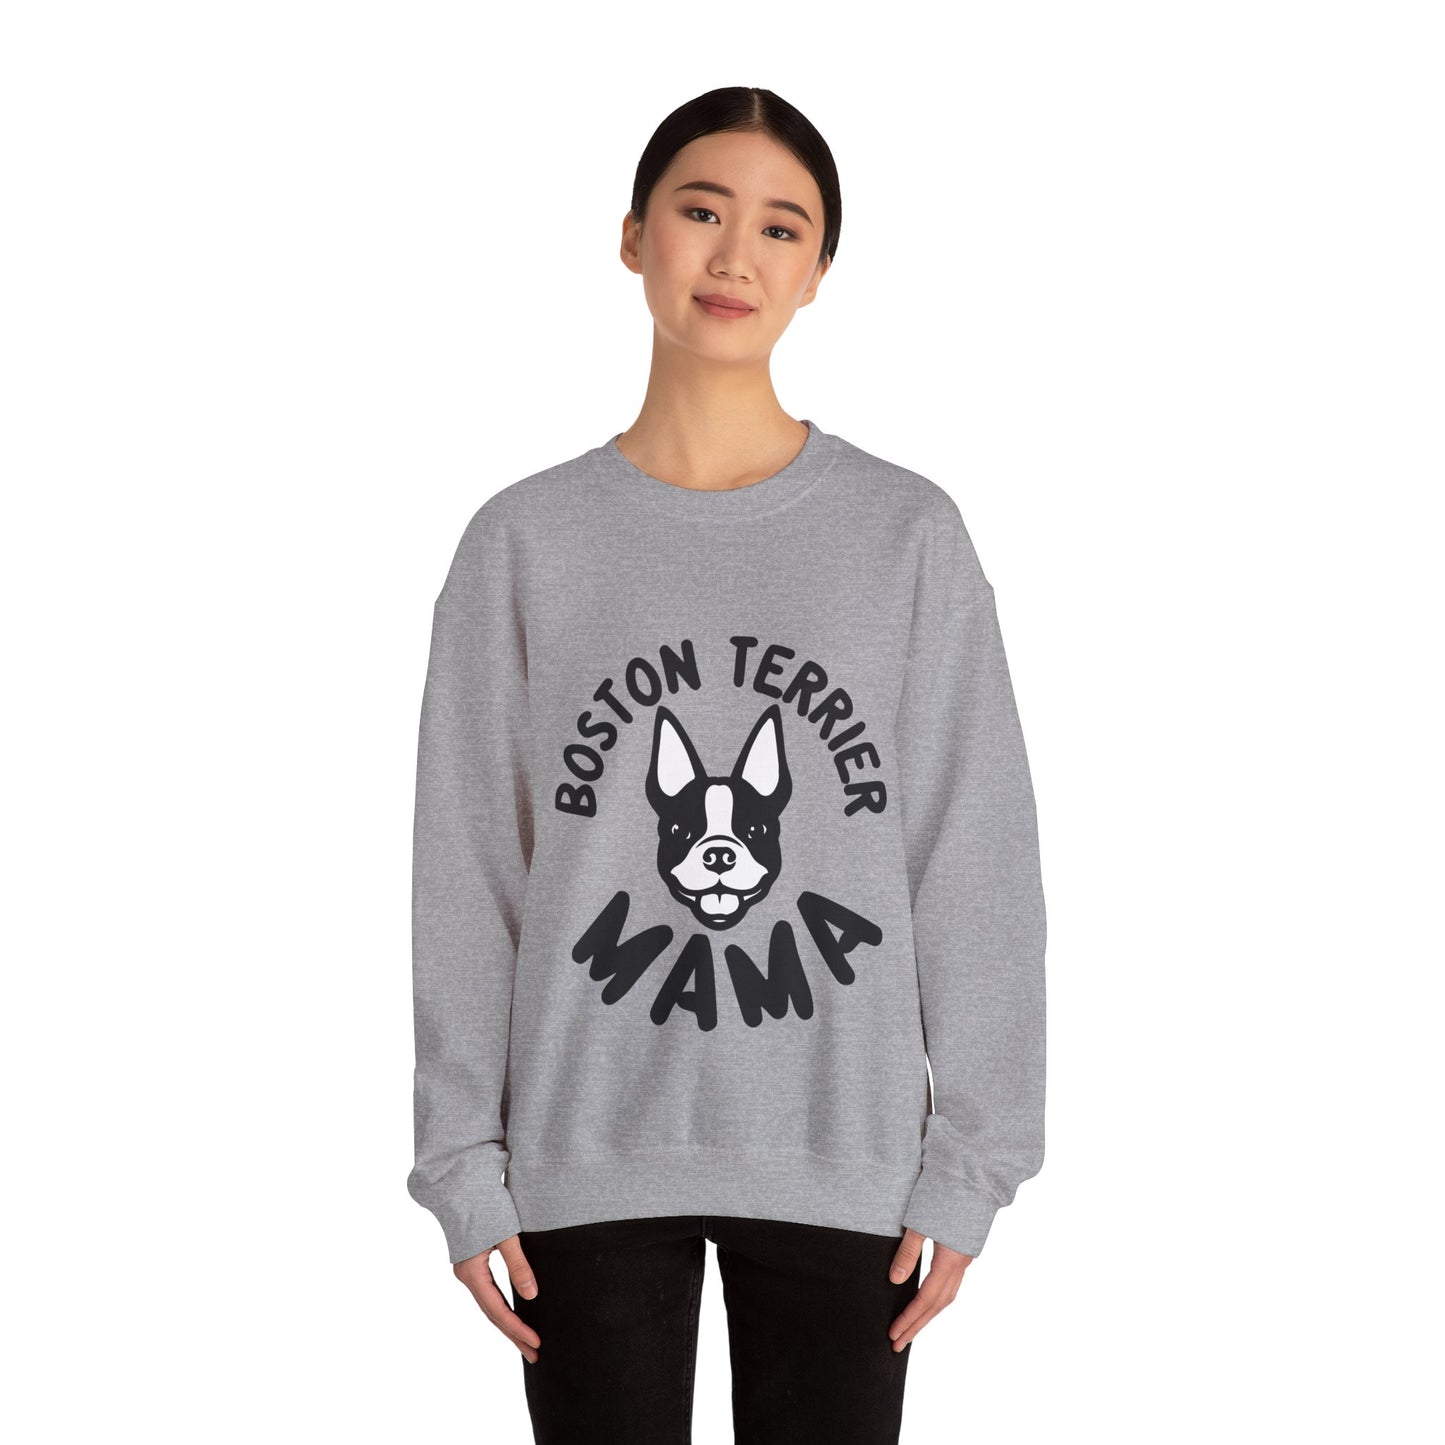 Clark - Unisex Sweatshirt for Boston Terrier lovers